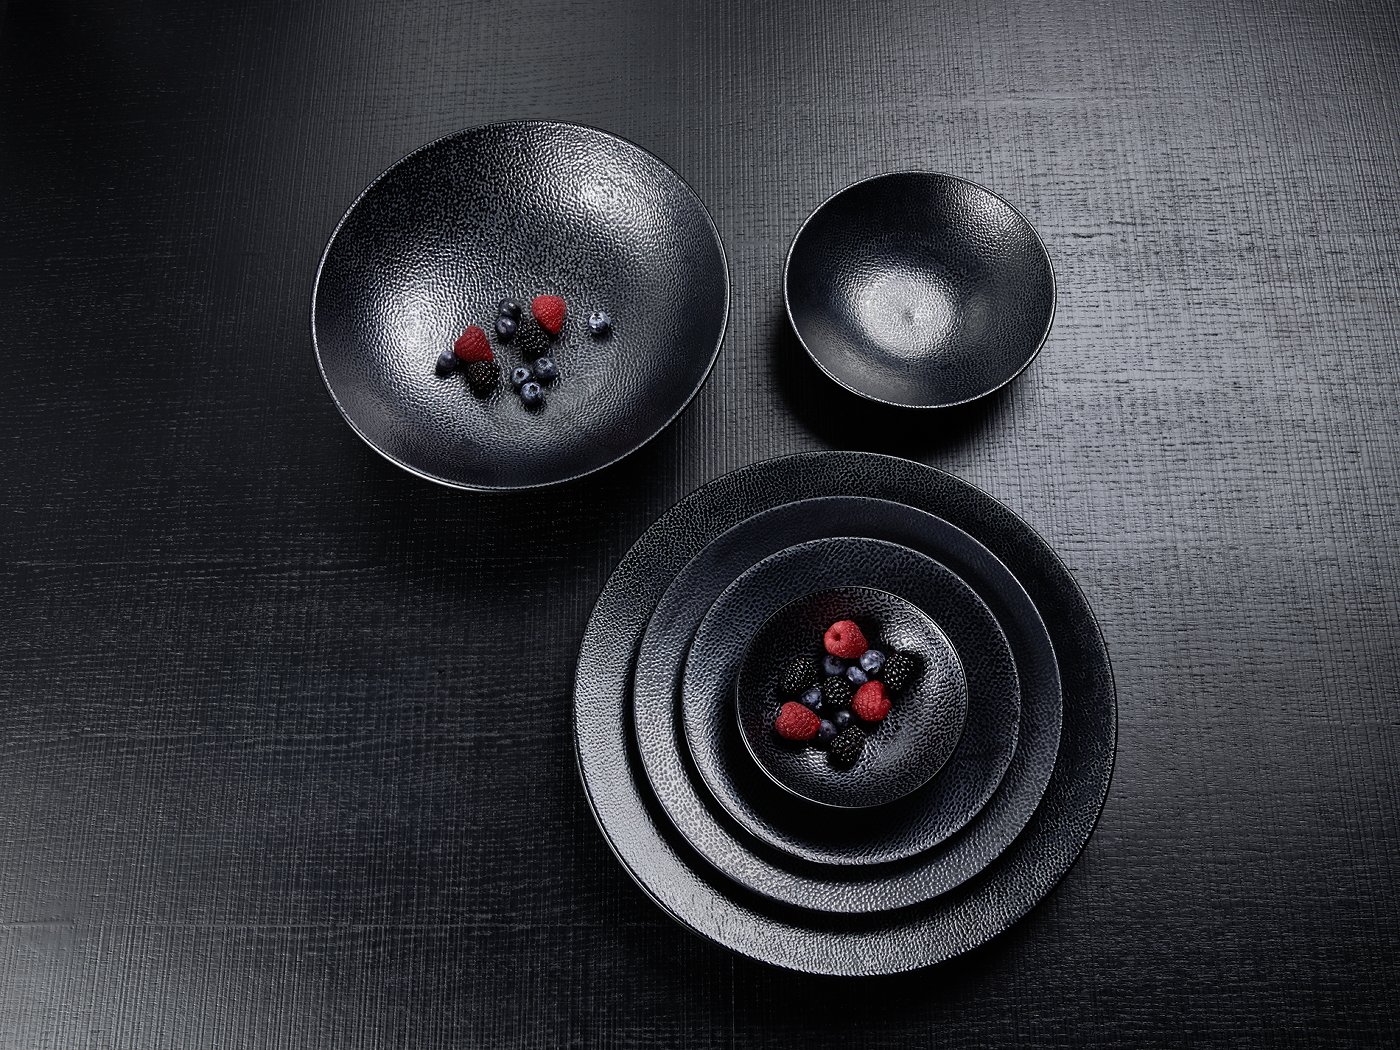 Kaori pasta plate black metallic/ray stoneware